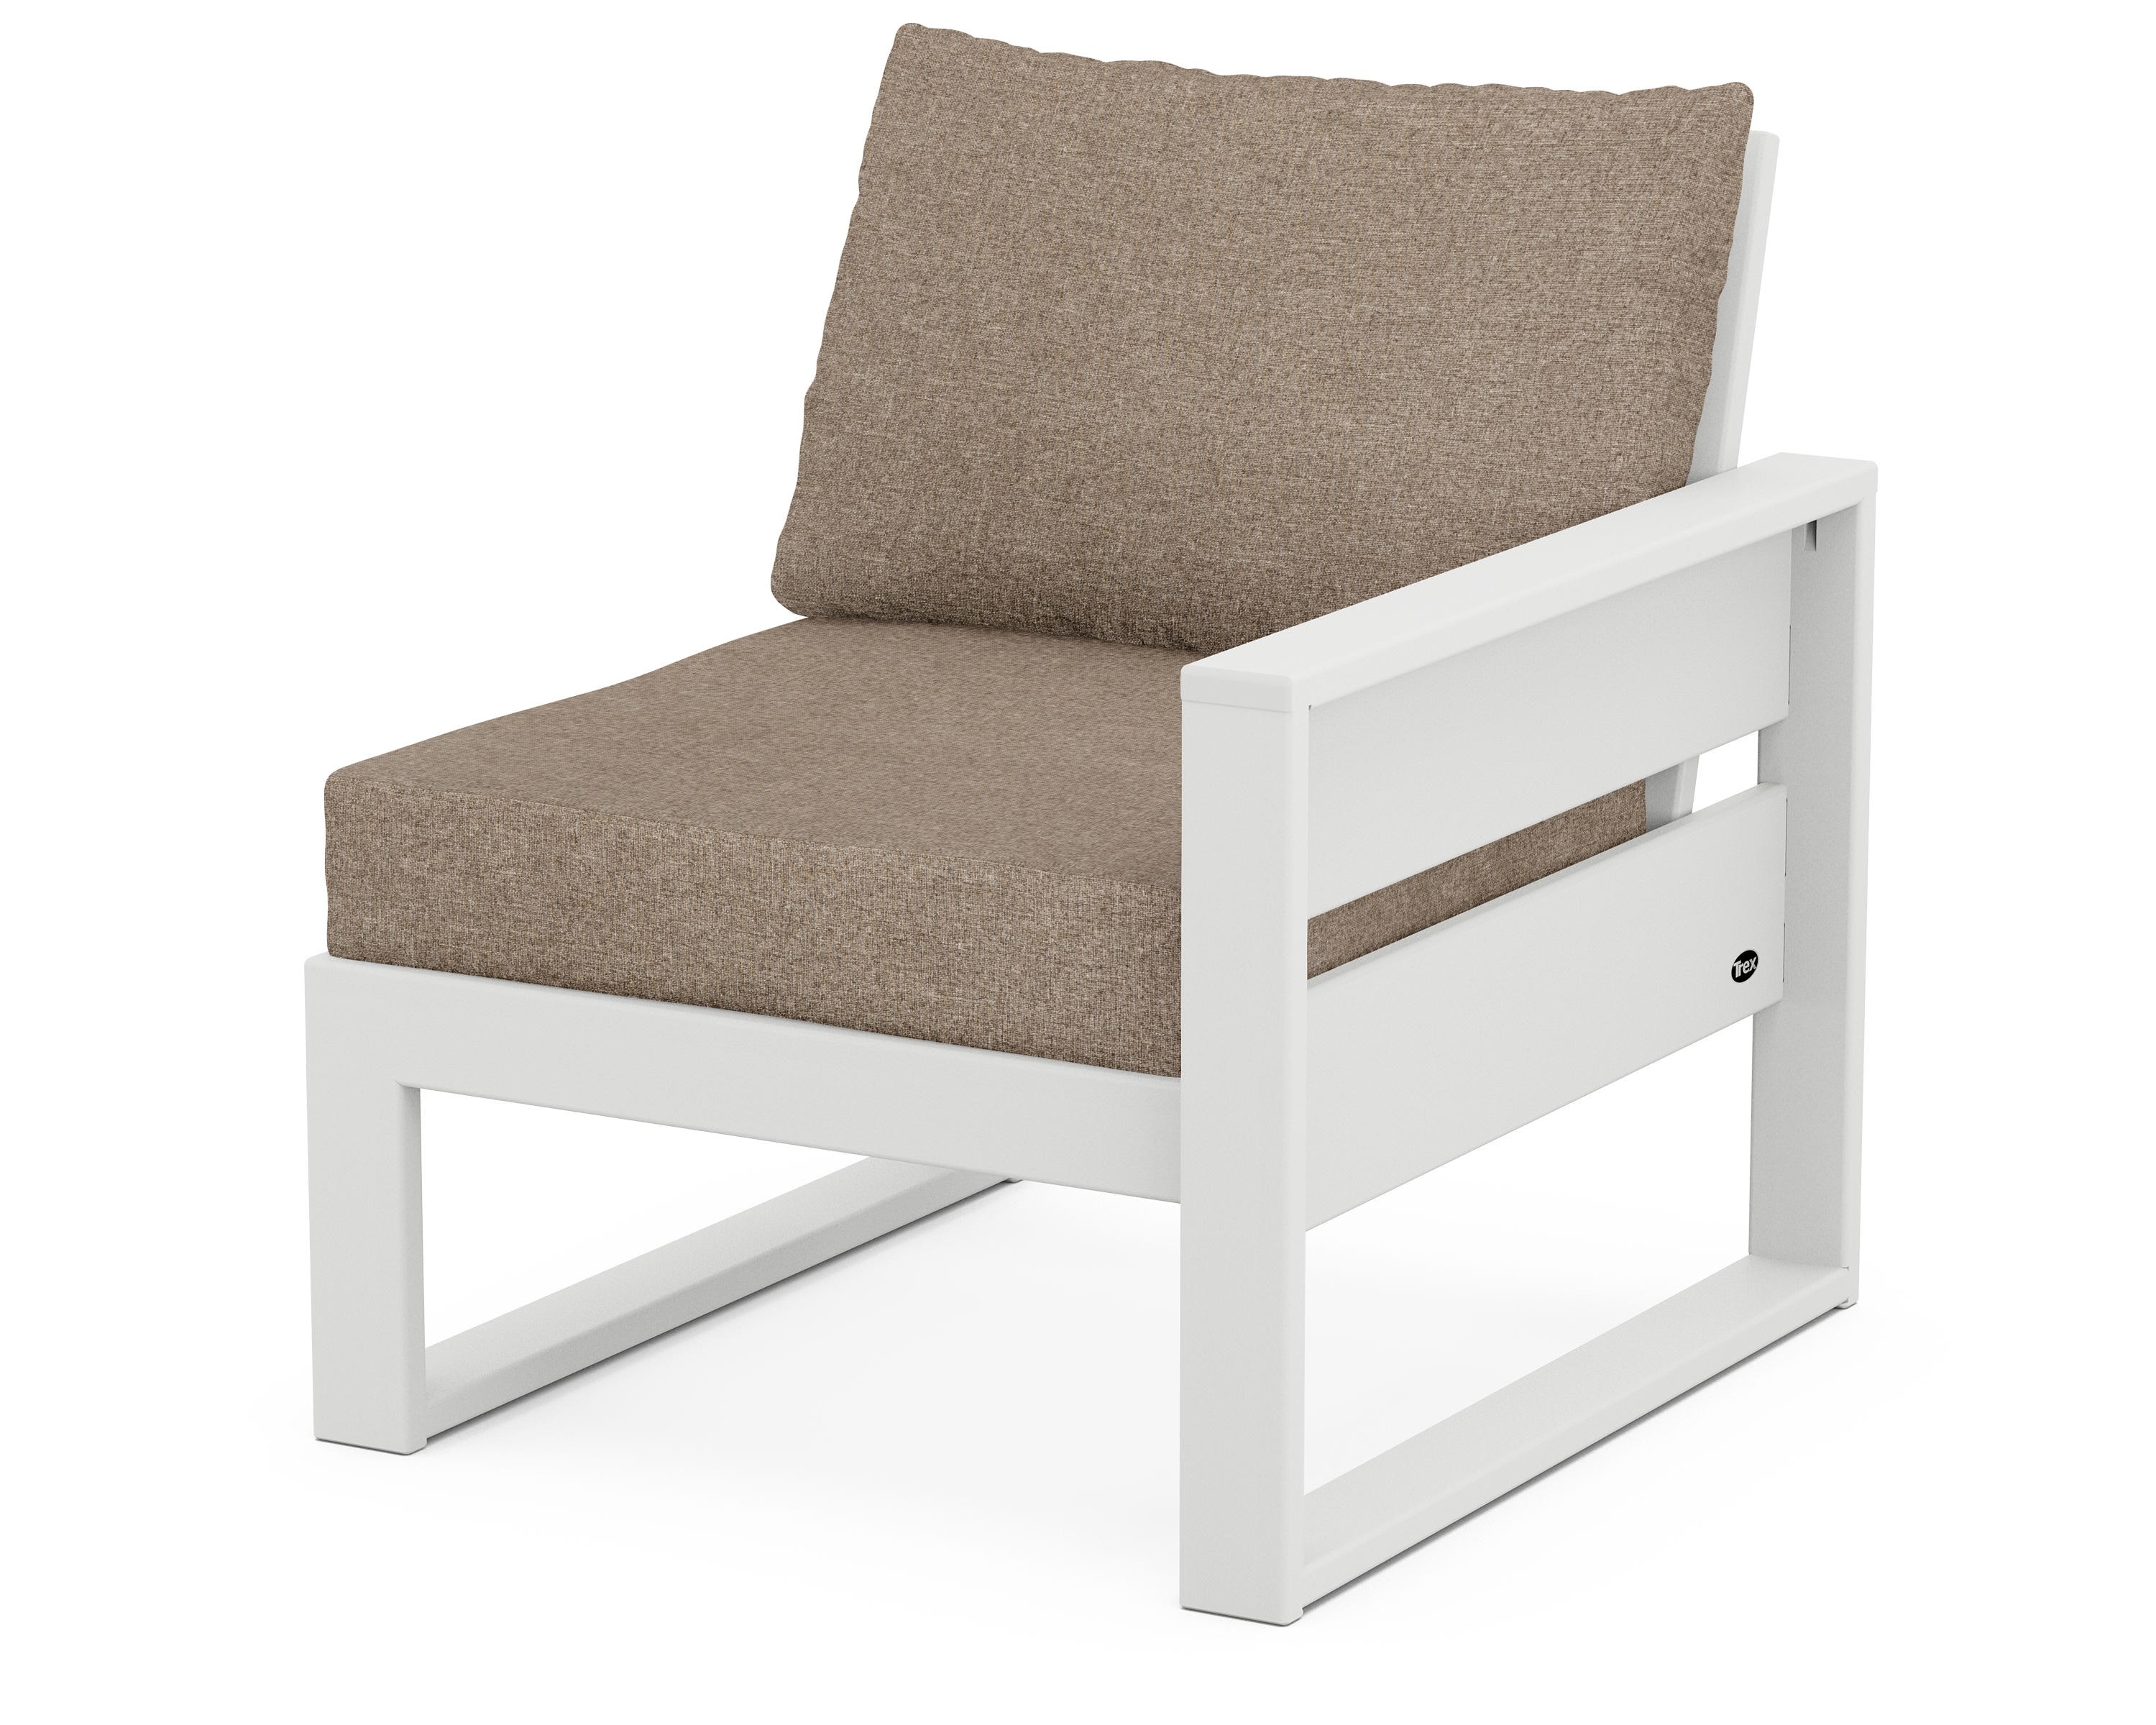 Trex Outdoor Furniture Eastport Modular Right Arm Chair